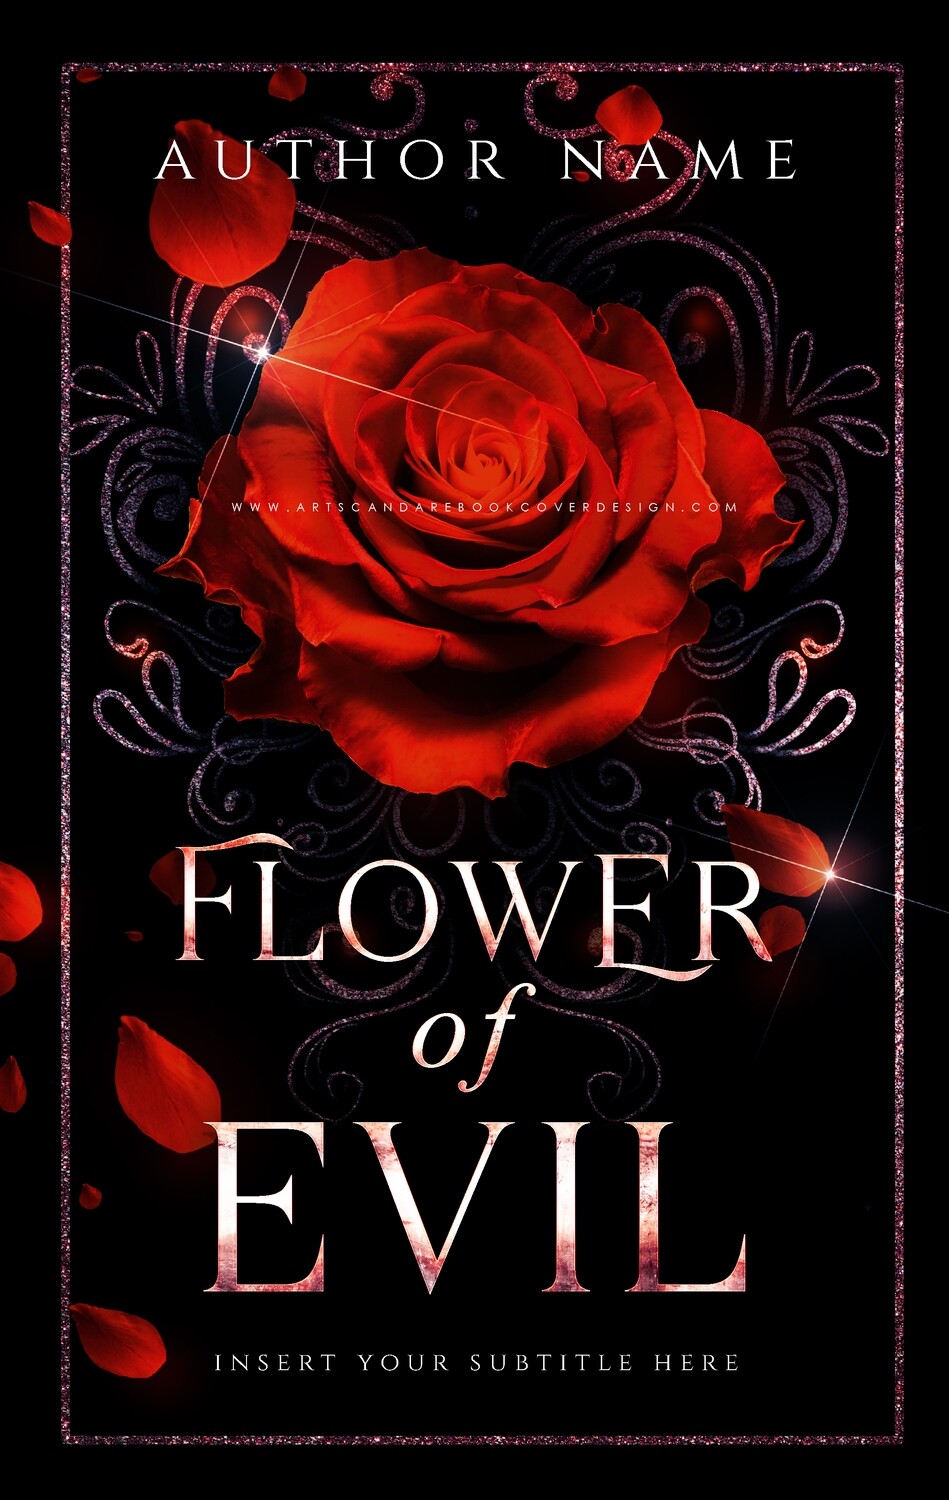 Ebook: Flower of Evil